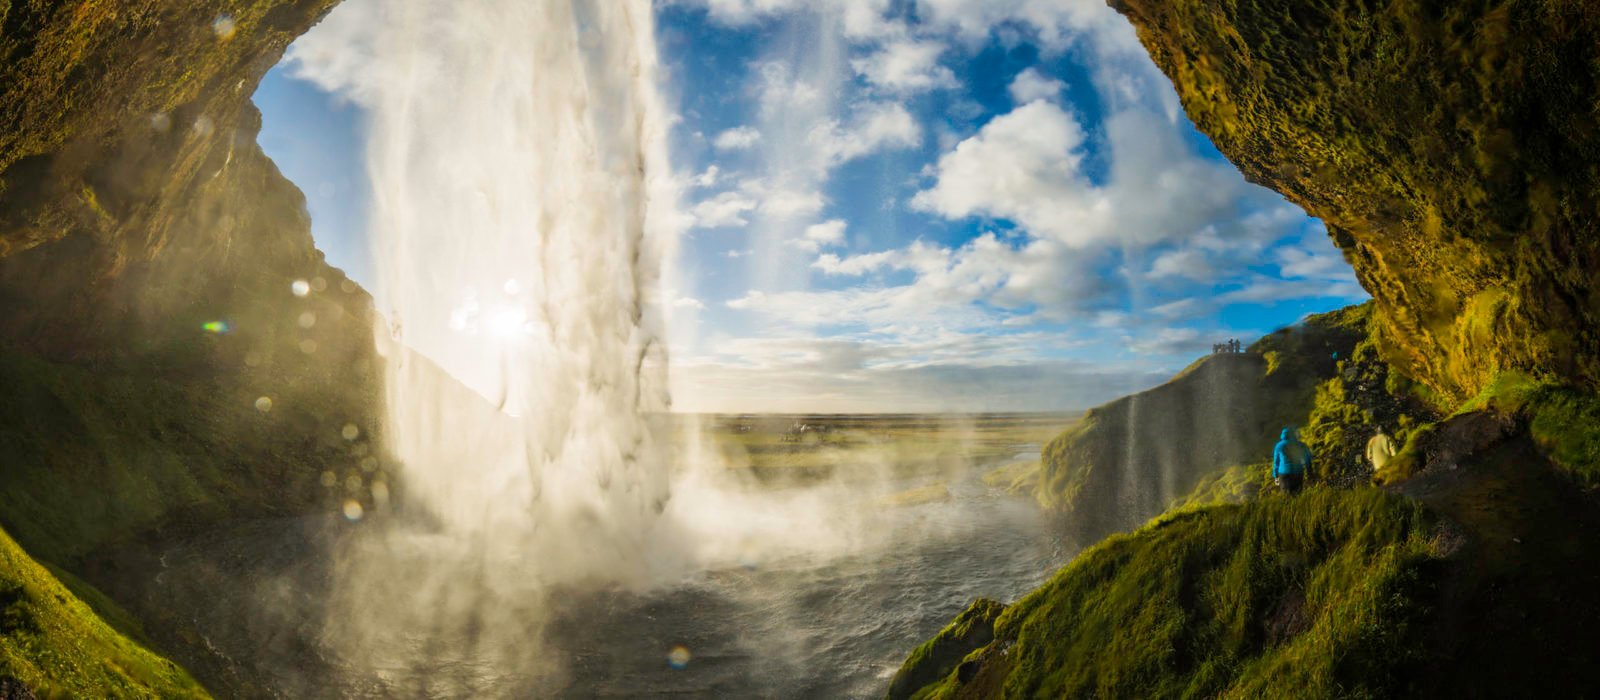 Waterfall tumbling into river above cavern mouth Seljalandsfoss Iceland